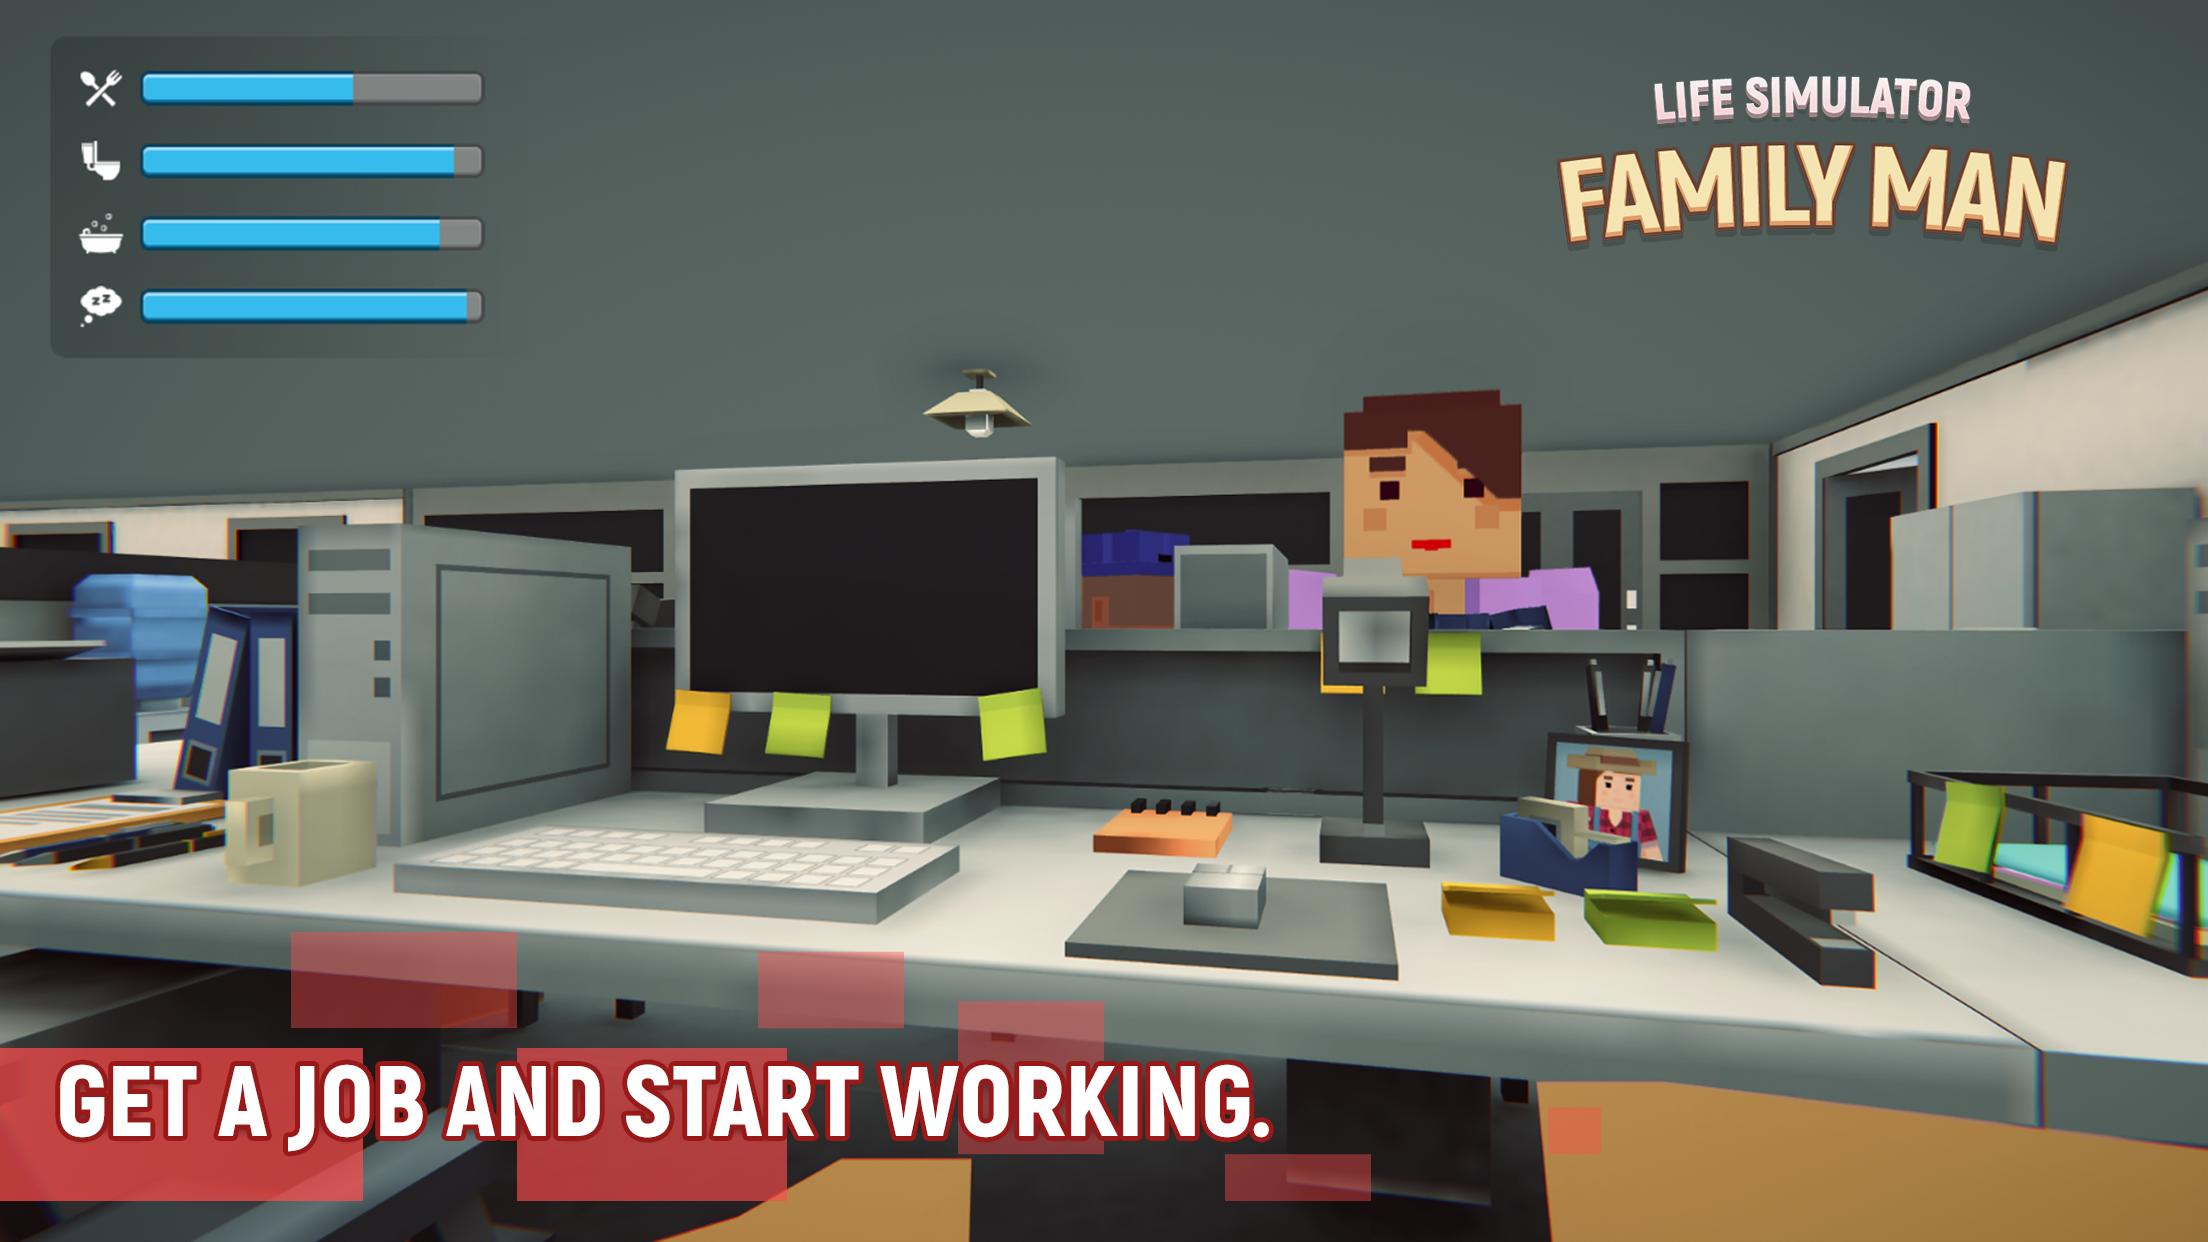 Years life simulator. Family man игра. Your Life Simulator. Новый симулятор жизни семья. Internet Cafe Simulator 2 арт.